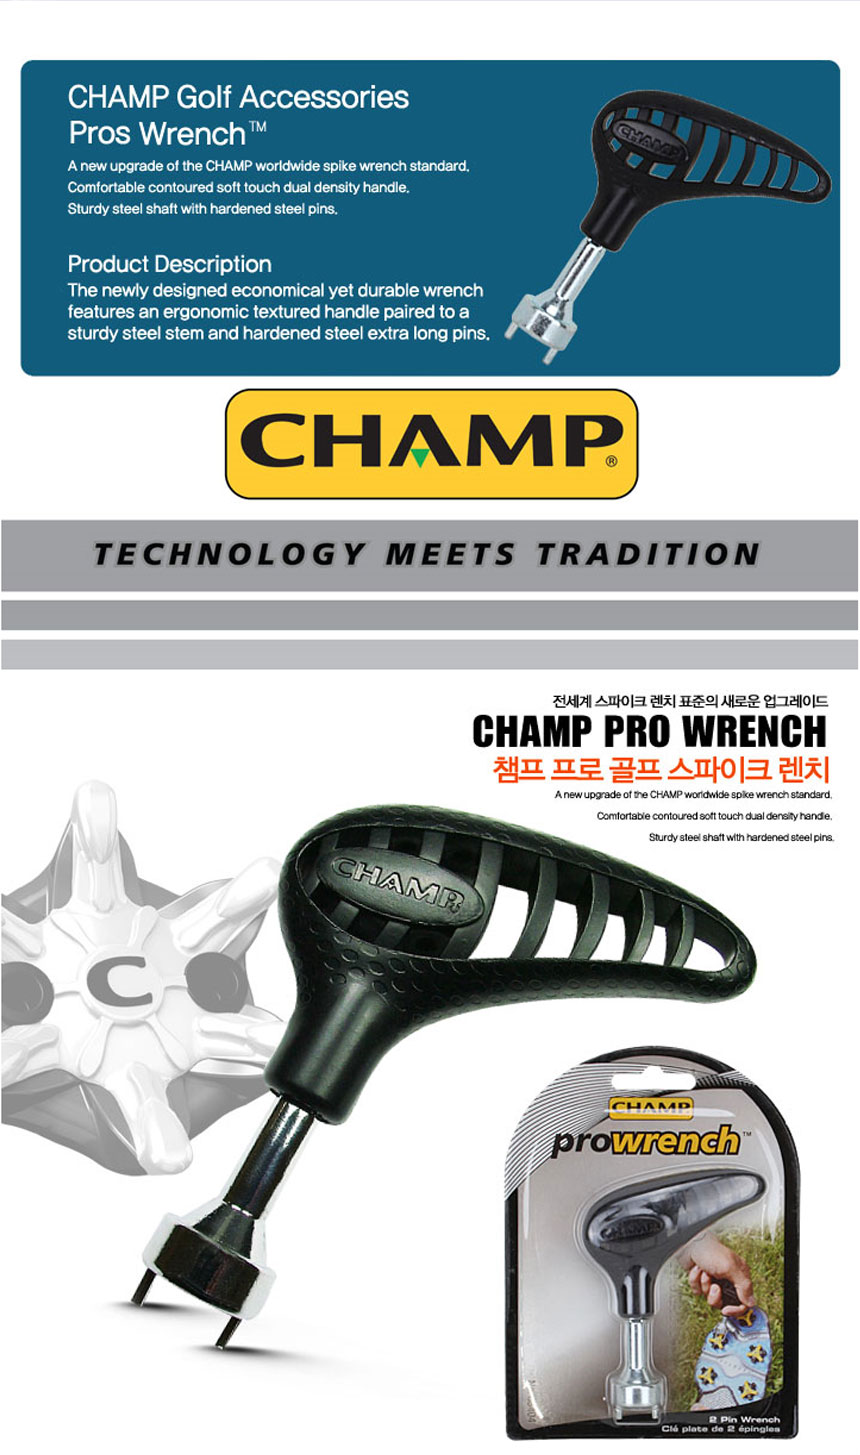 champ-pro-wrench_01_090532.jpg